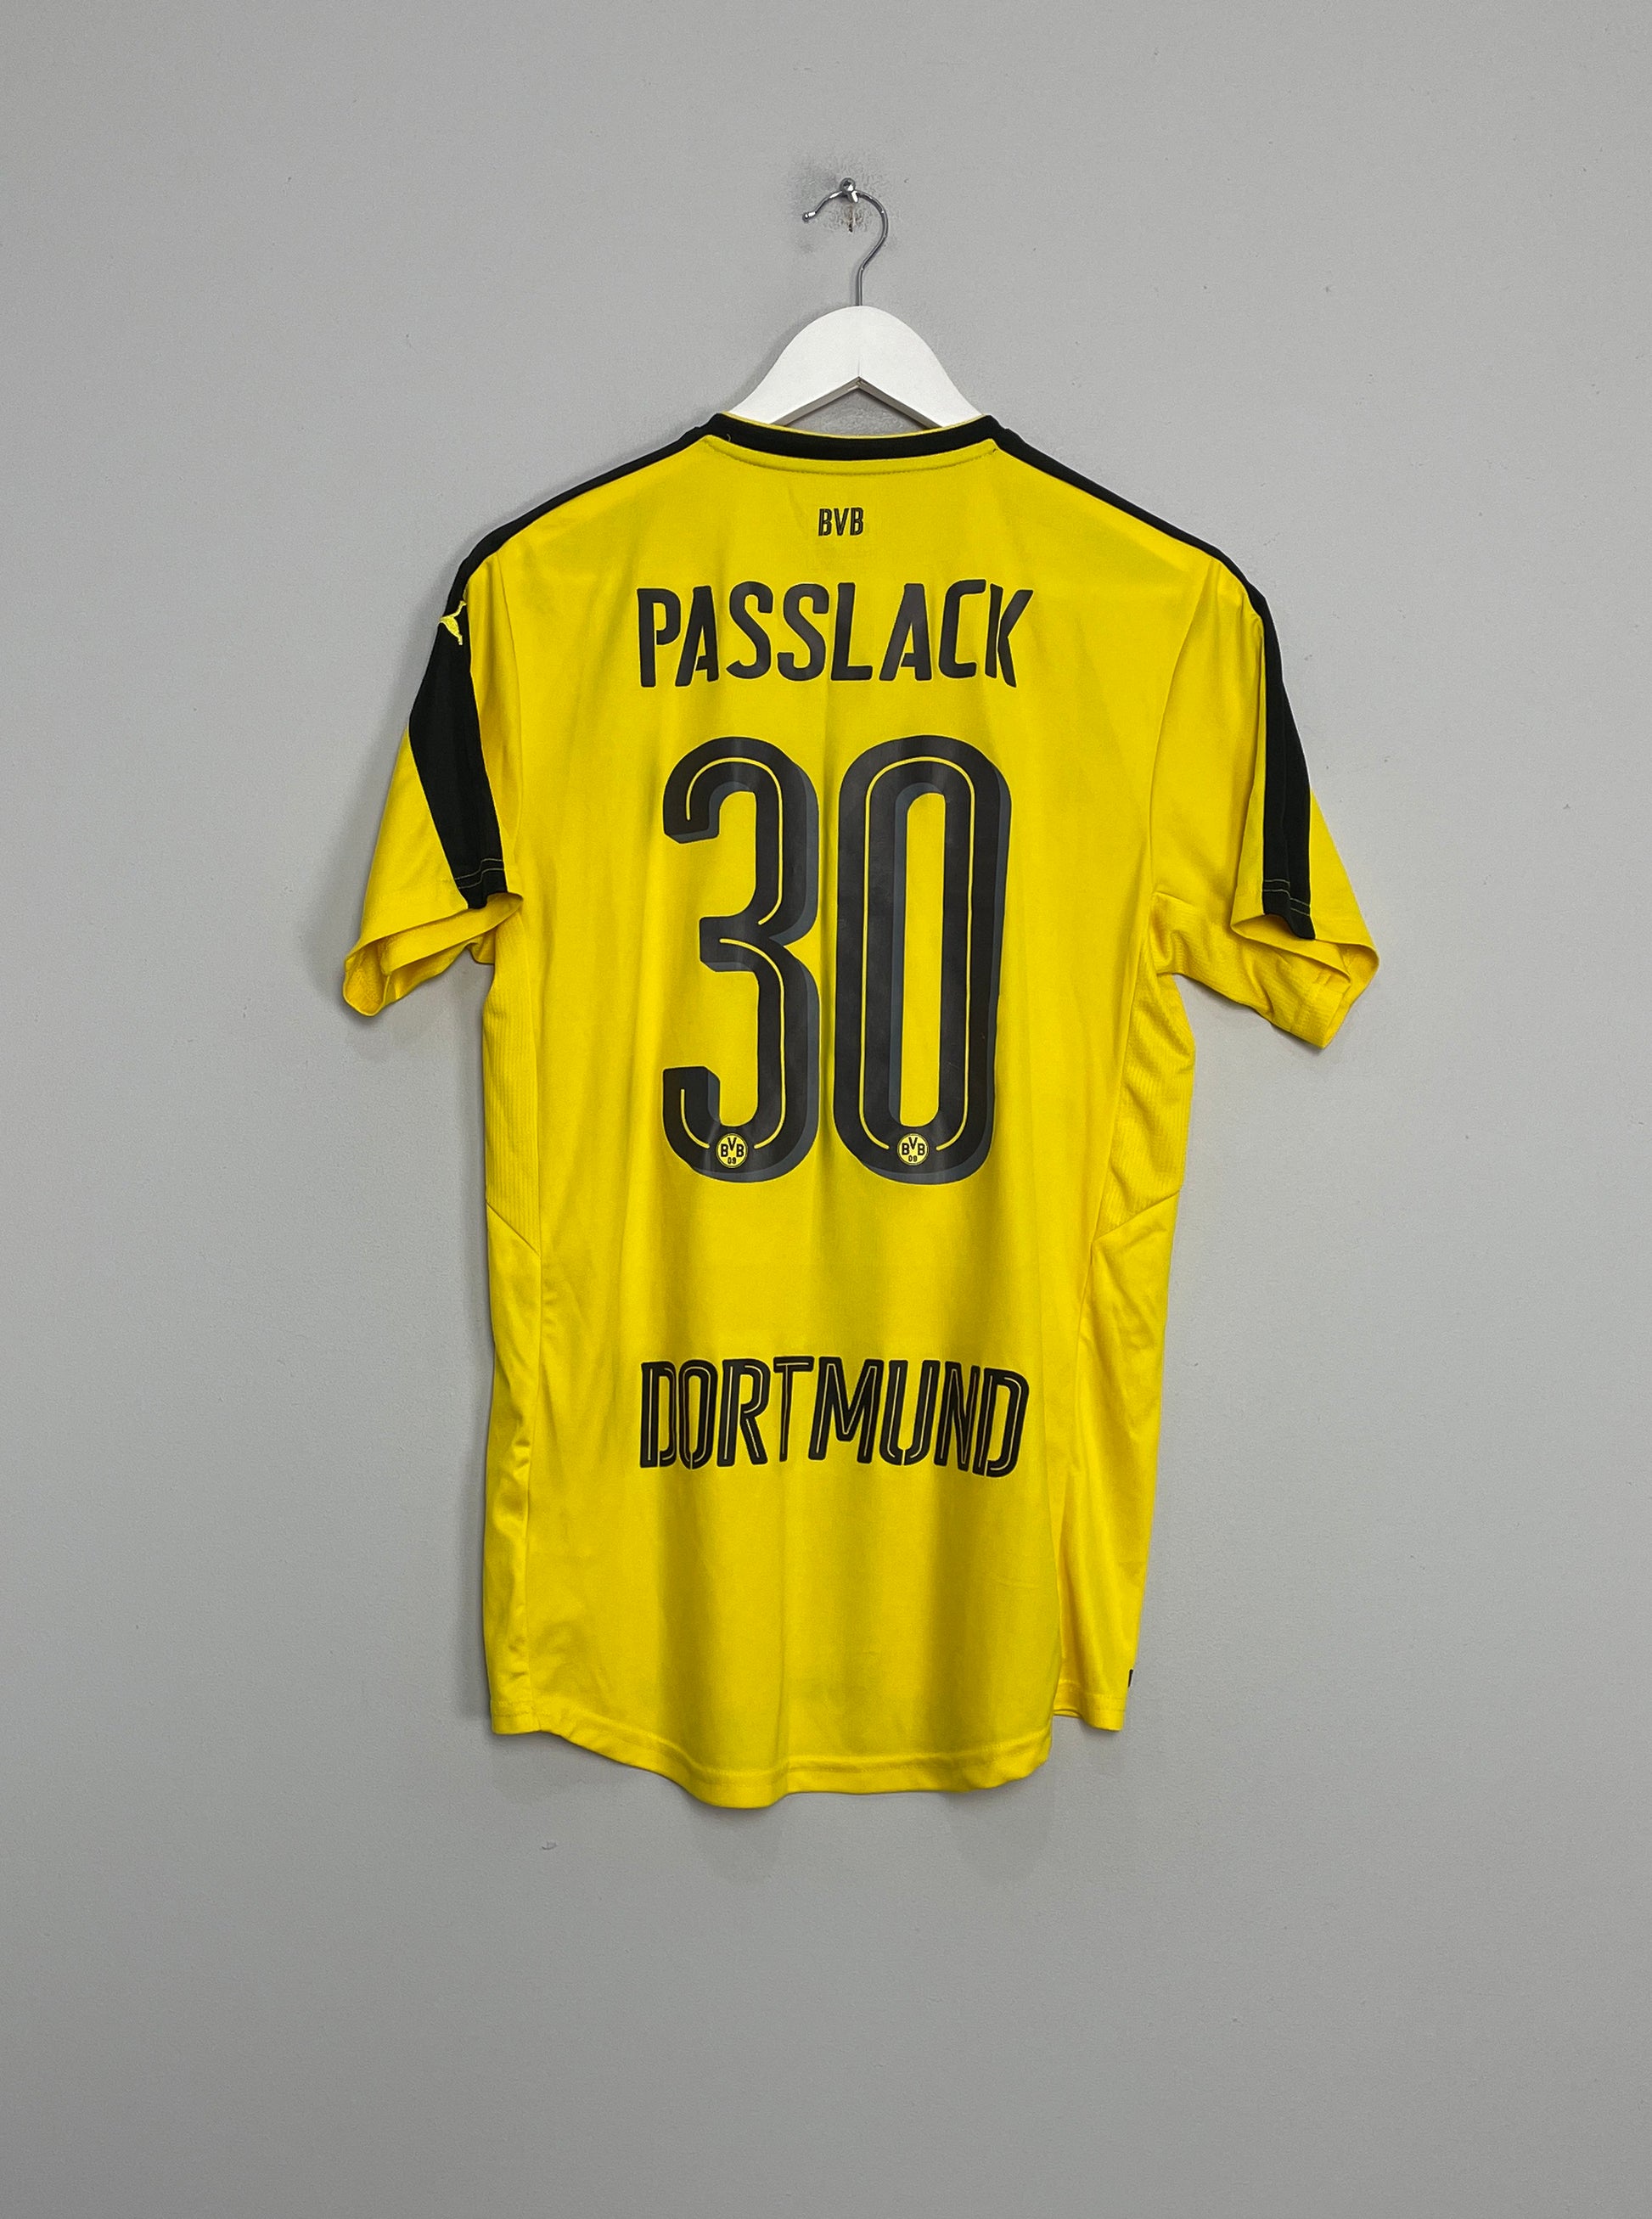 Image of the Dortmund Passlack shirt from the 2016/17 season